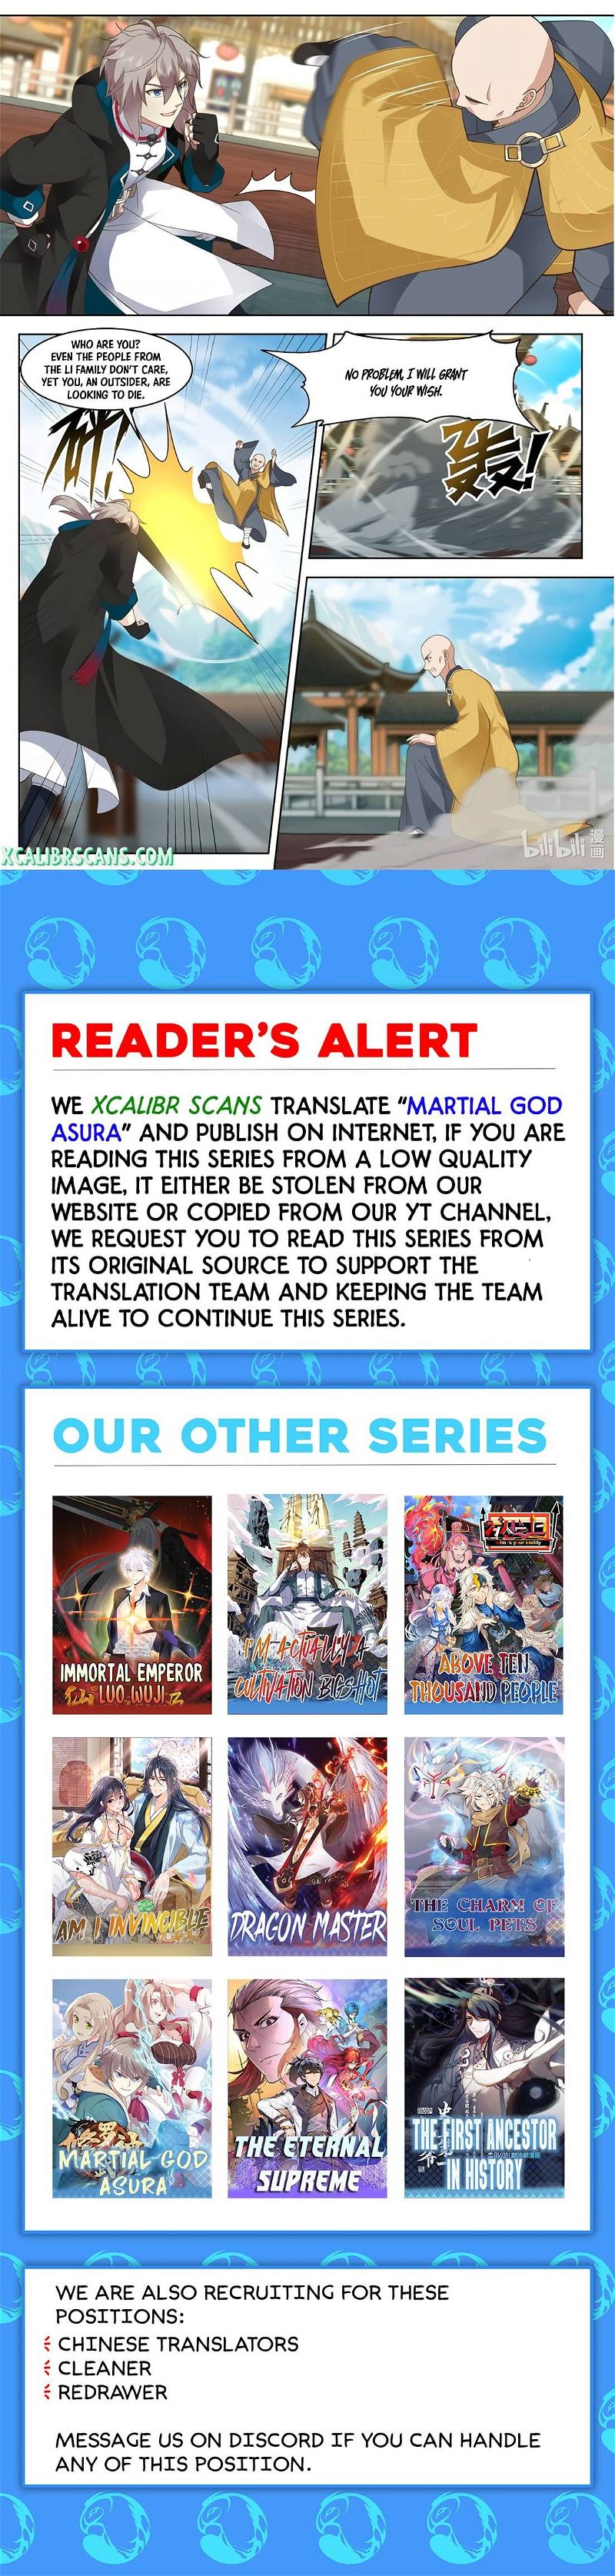 Martial God Asura Chapter 486 page 10